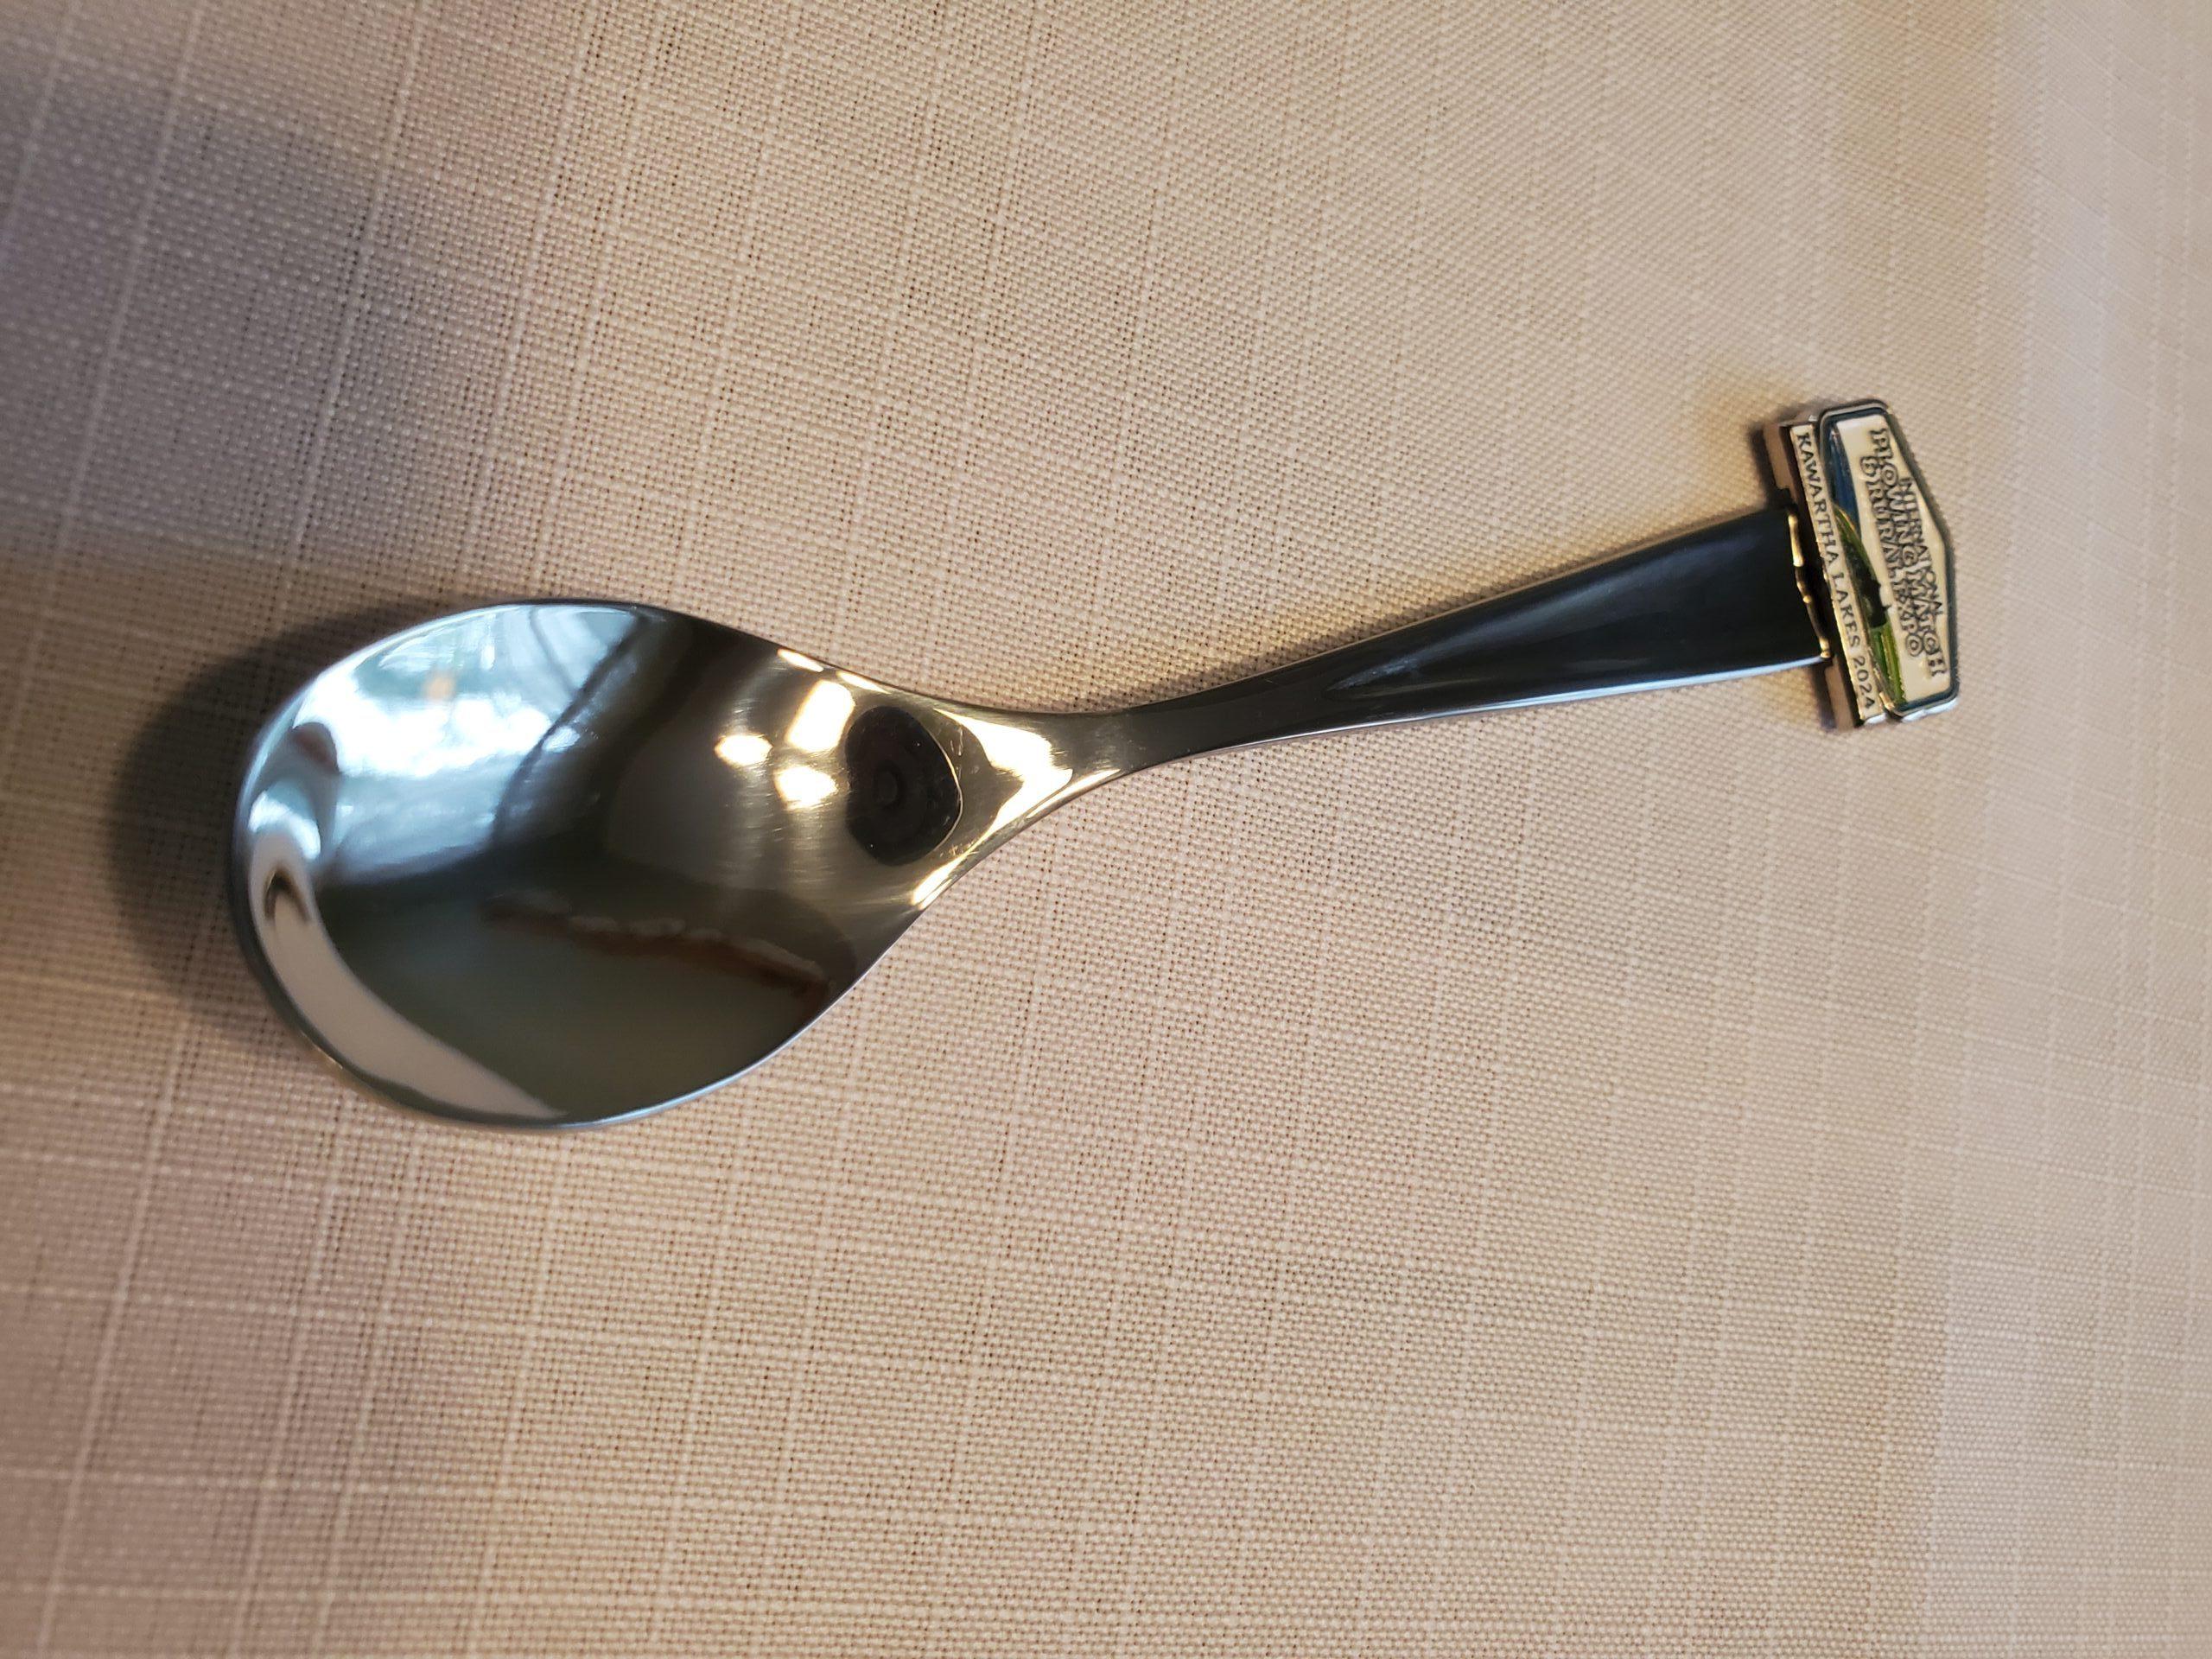 Spoons - $25 